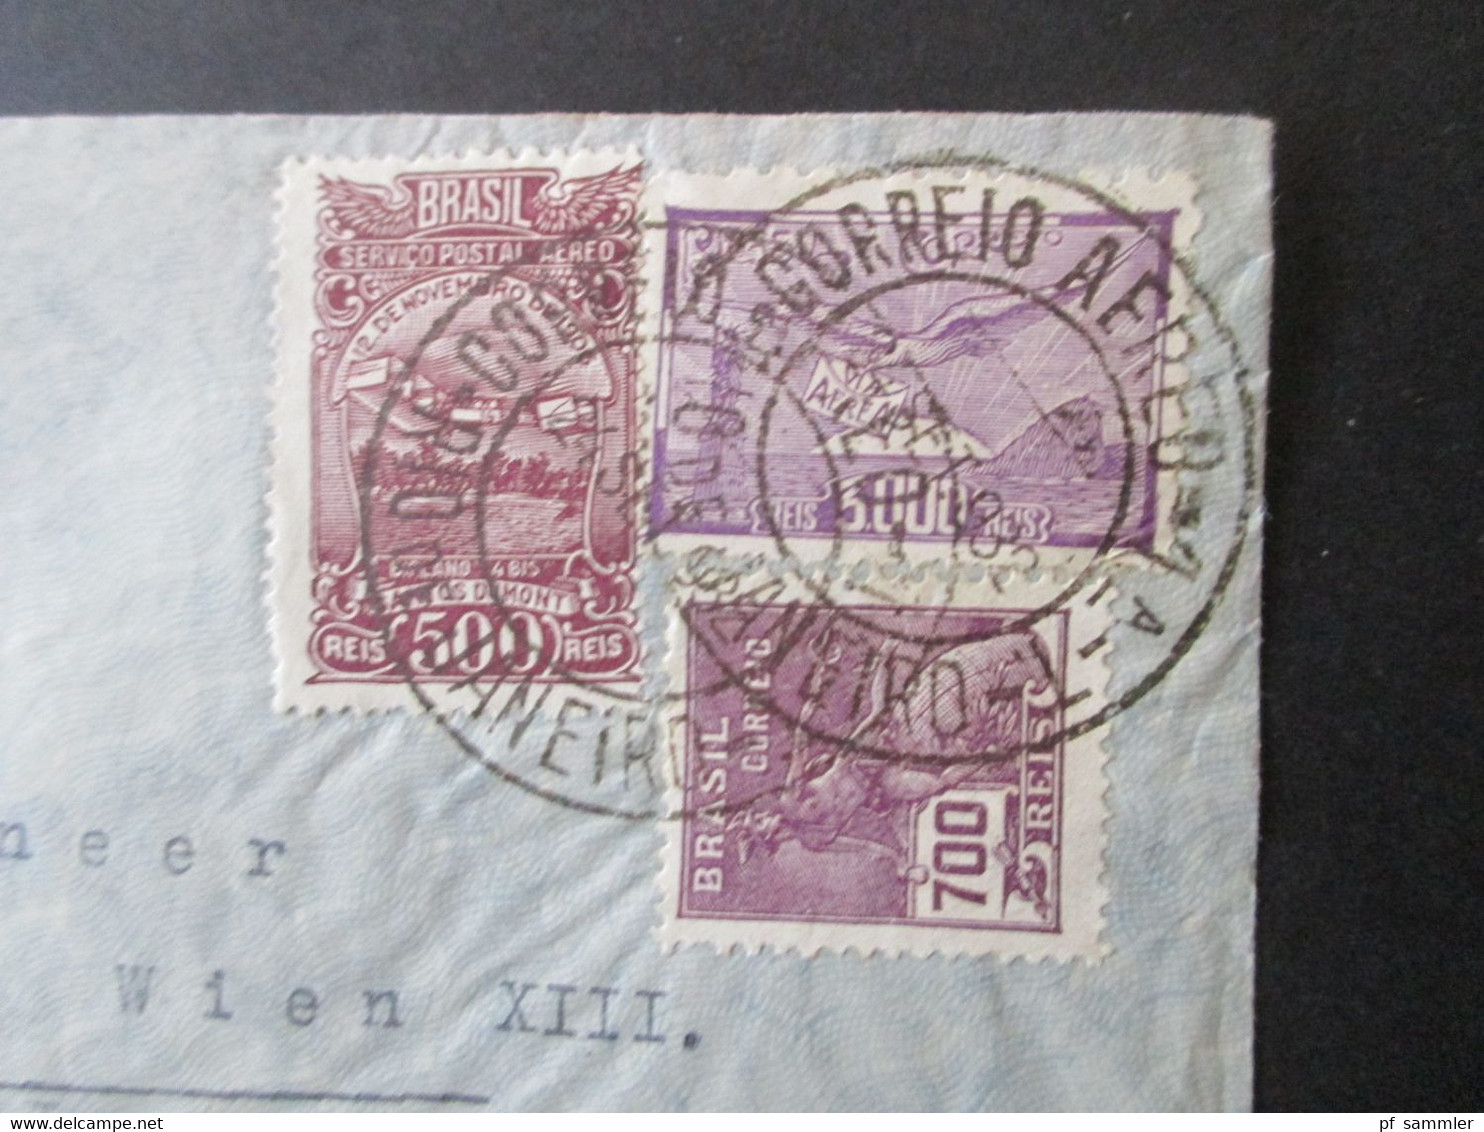 Brasilien 1932 Luftpostbeleg Violetter Stempel Via Aeropostale Mit Flugpostmarke Nr. 337 Nach Wien Gesendet - Storia Postale